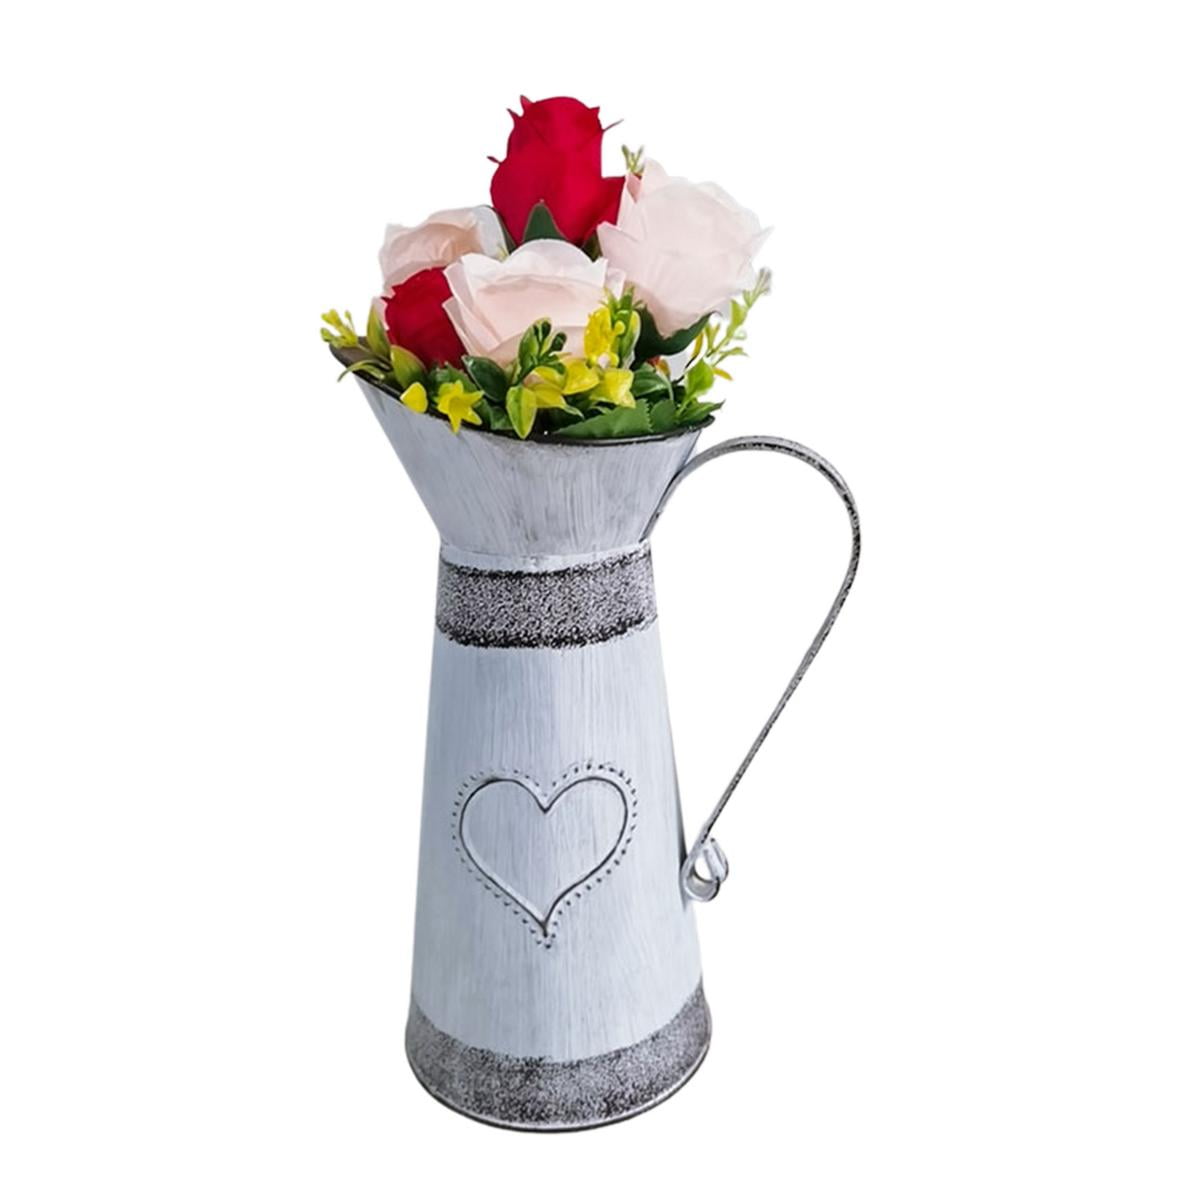 Cream Metal Zinc Jug Vintage Shabby Chic Pitcher Rustic Wedding Flower Vase Lge 